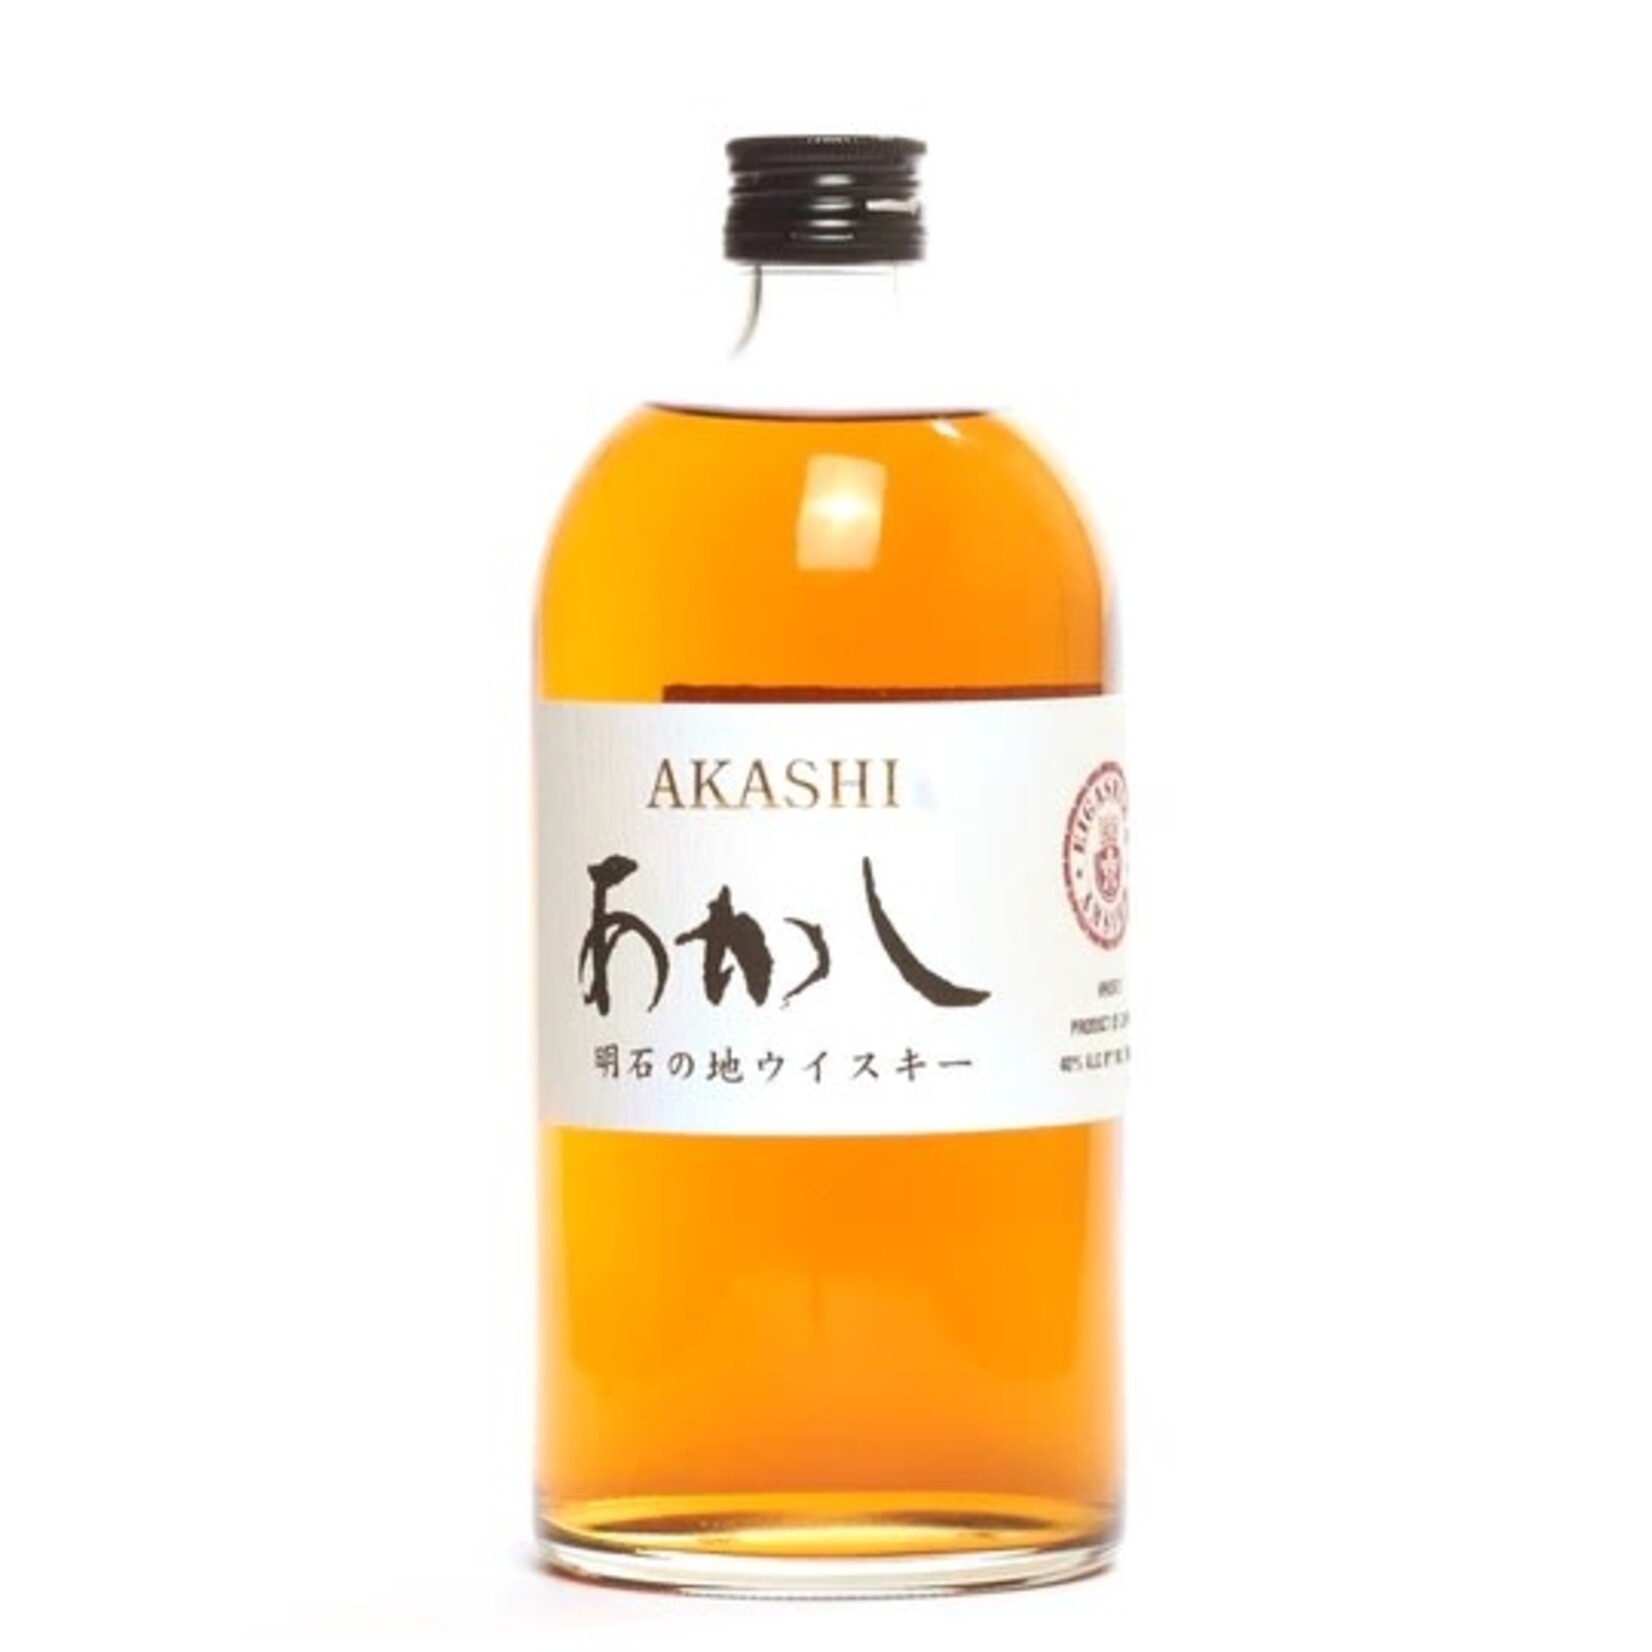 Akashi Malt & Grain Whiskey 750 mL